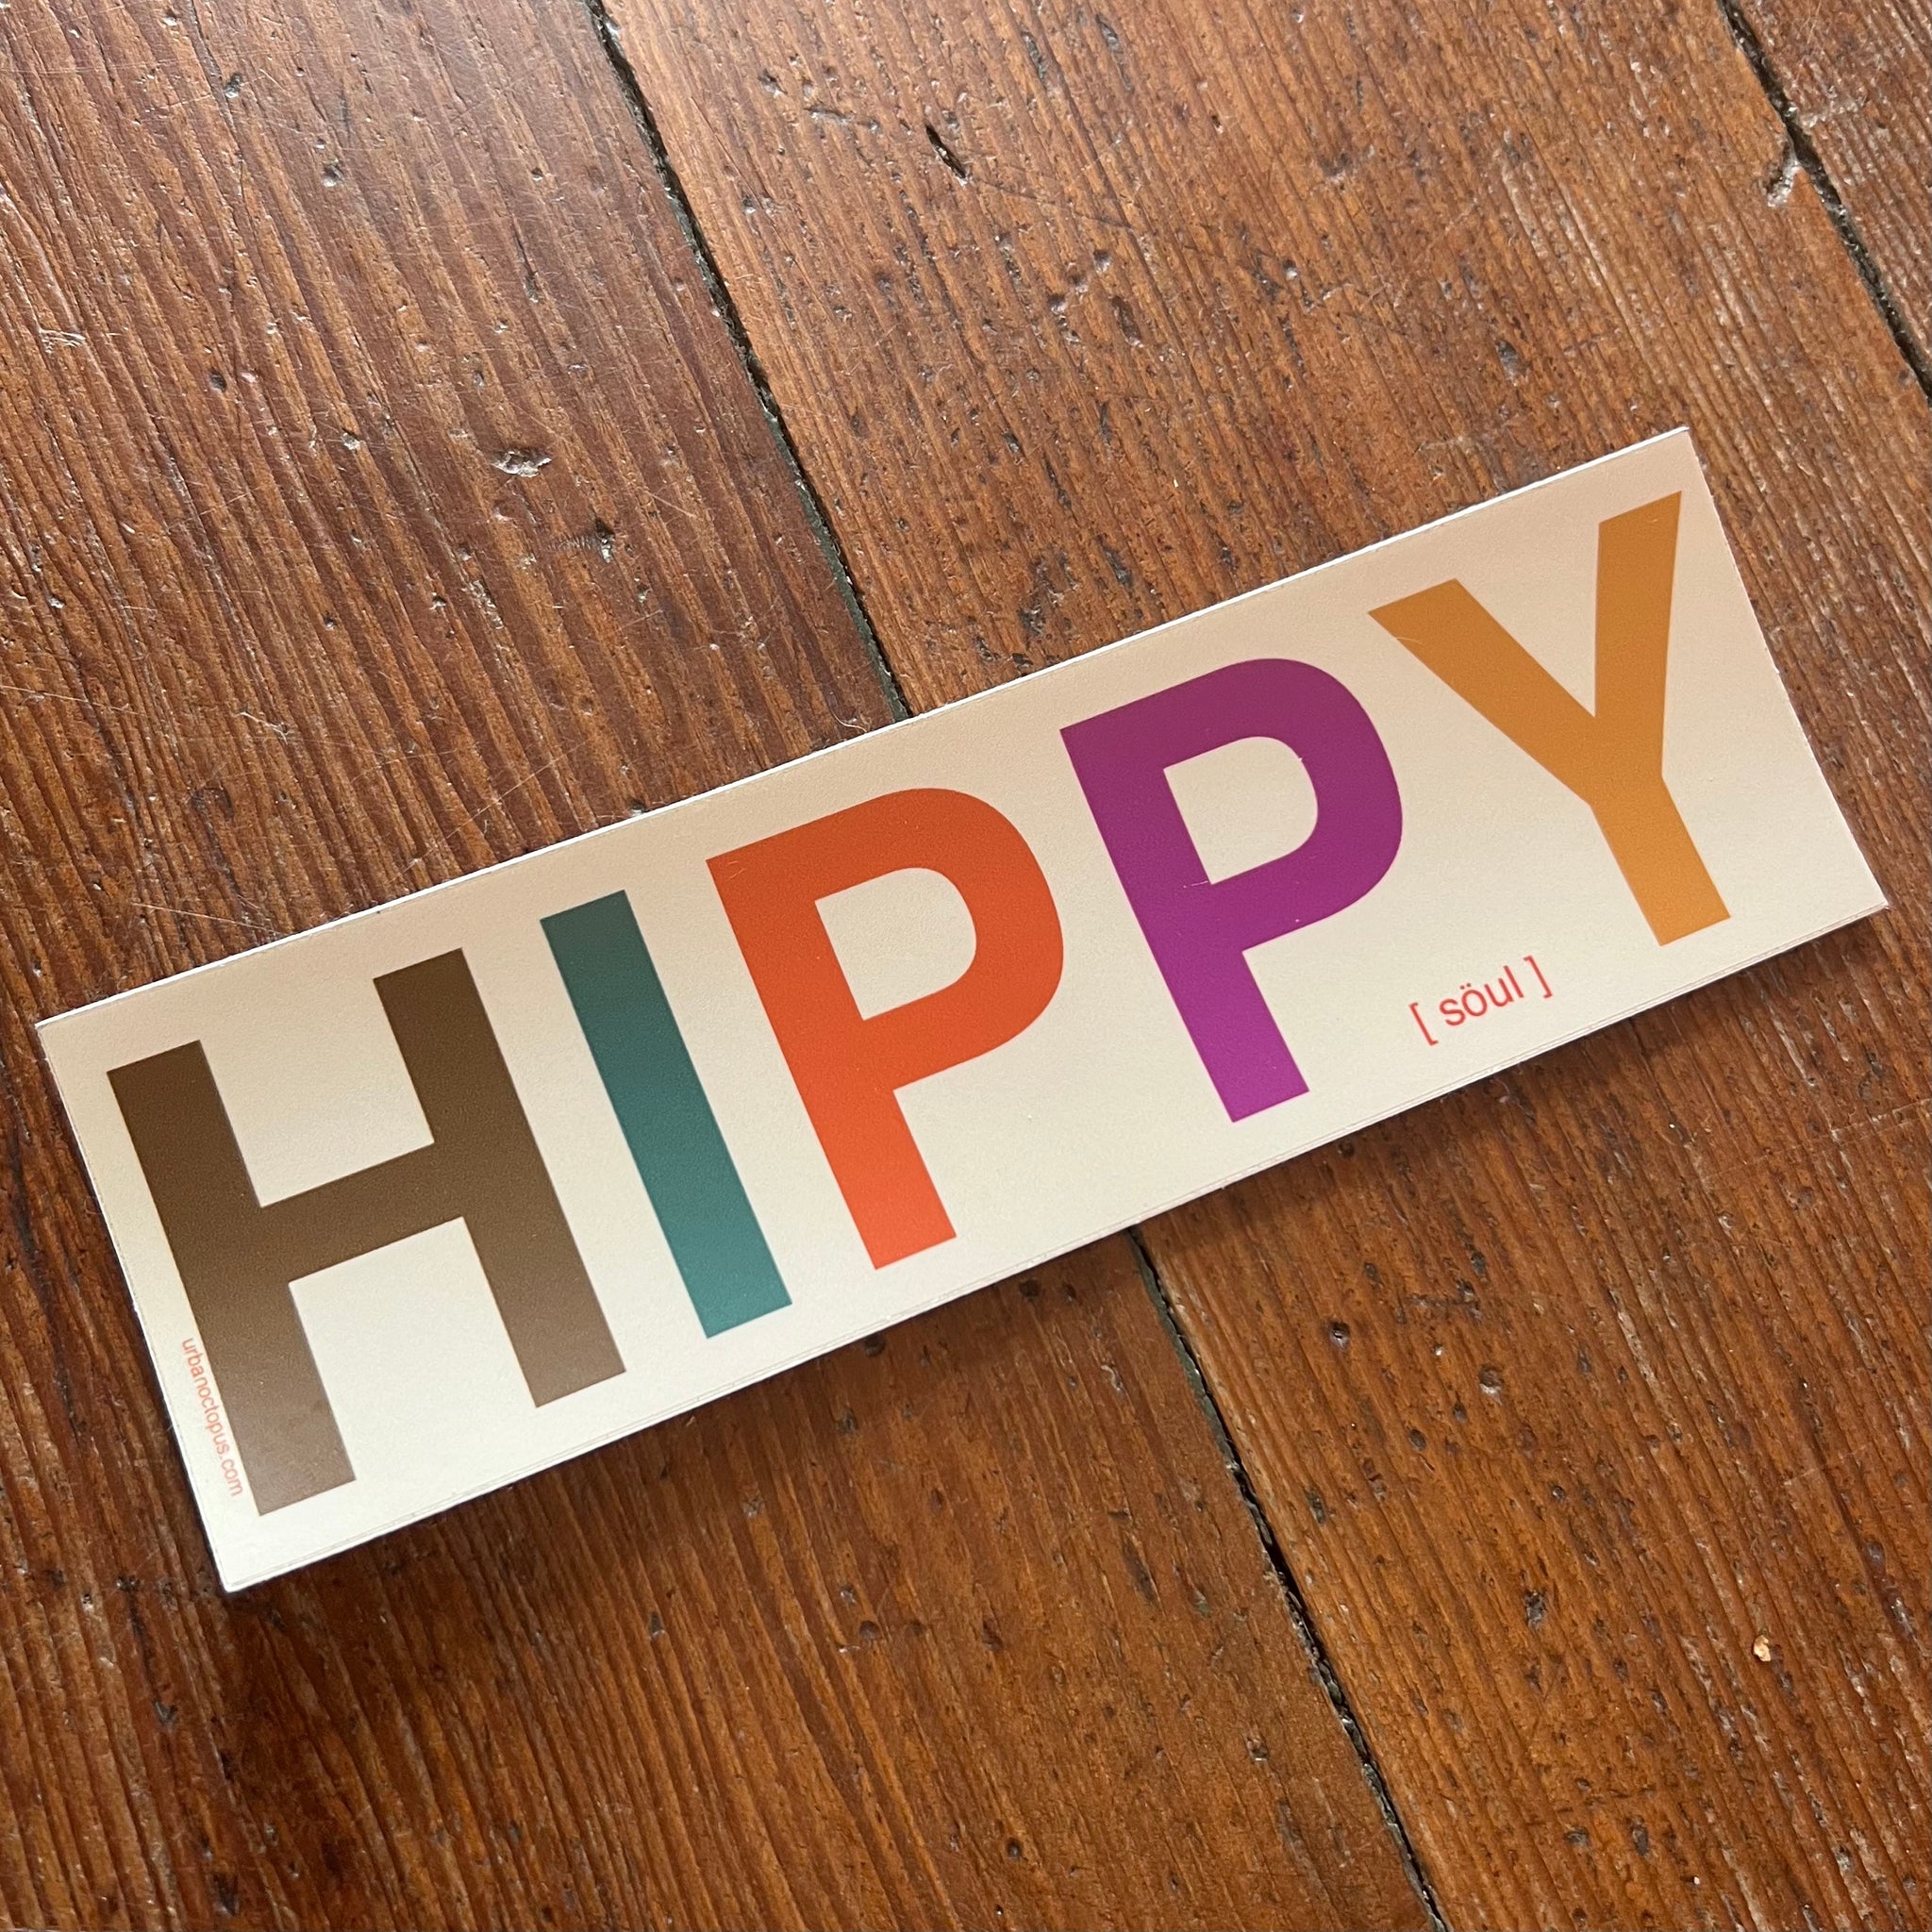 Hippy [Söul] Bumper Sticker